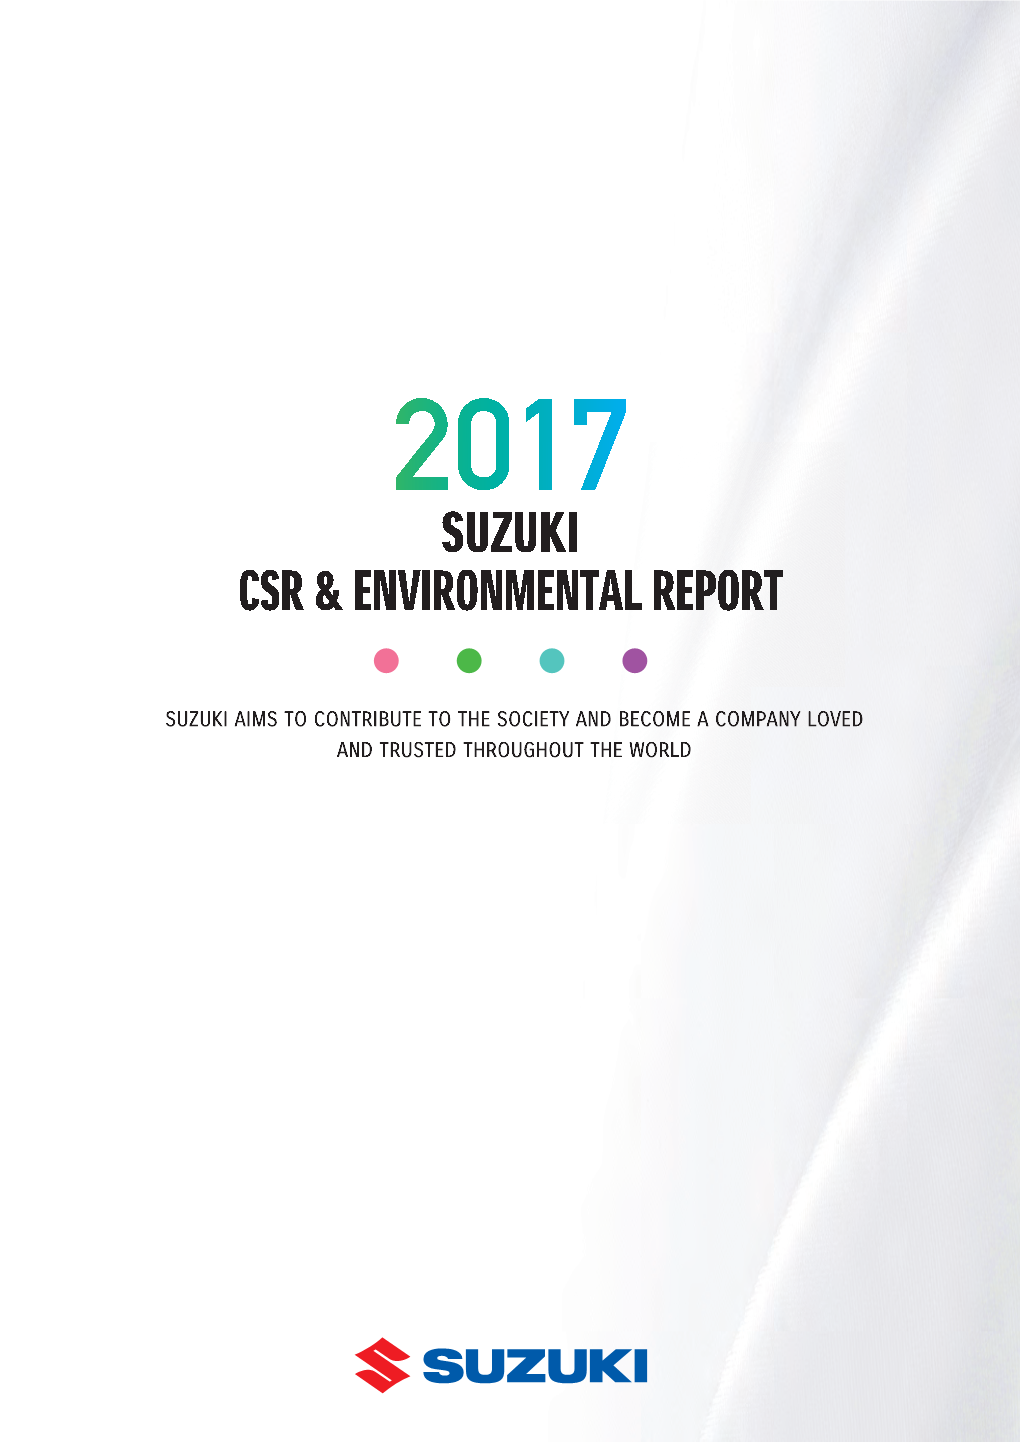 2017 Suzuki CSR & Environmental Report